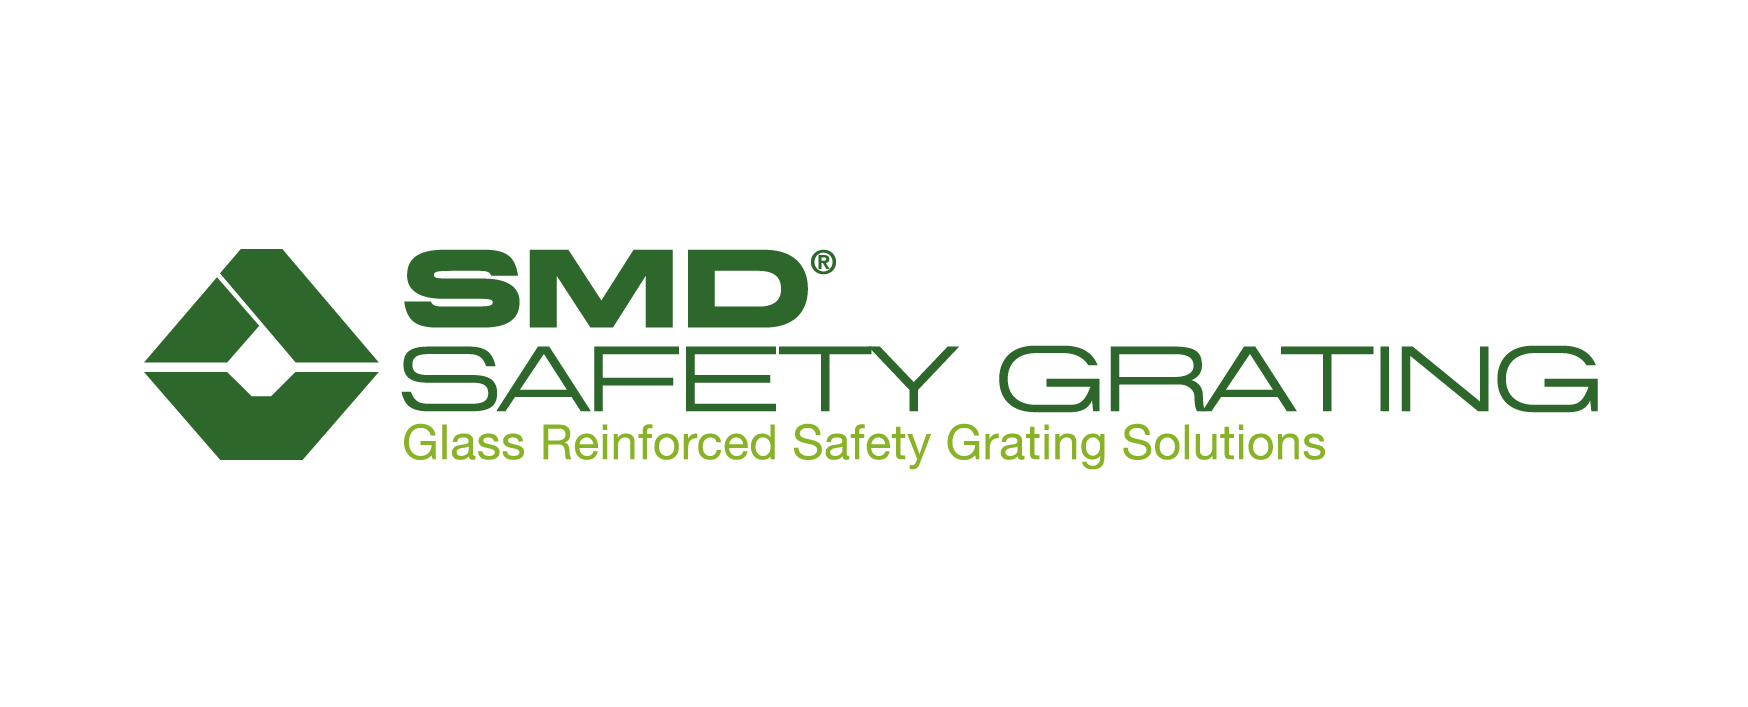 grp safety grating